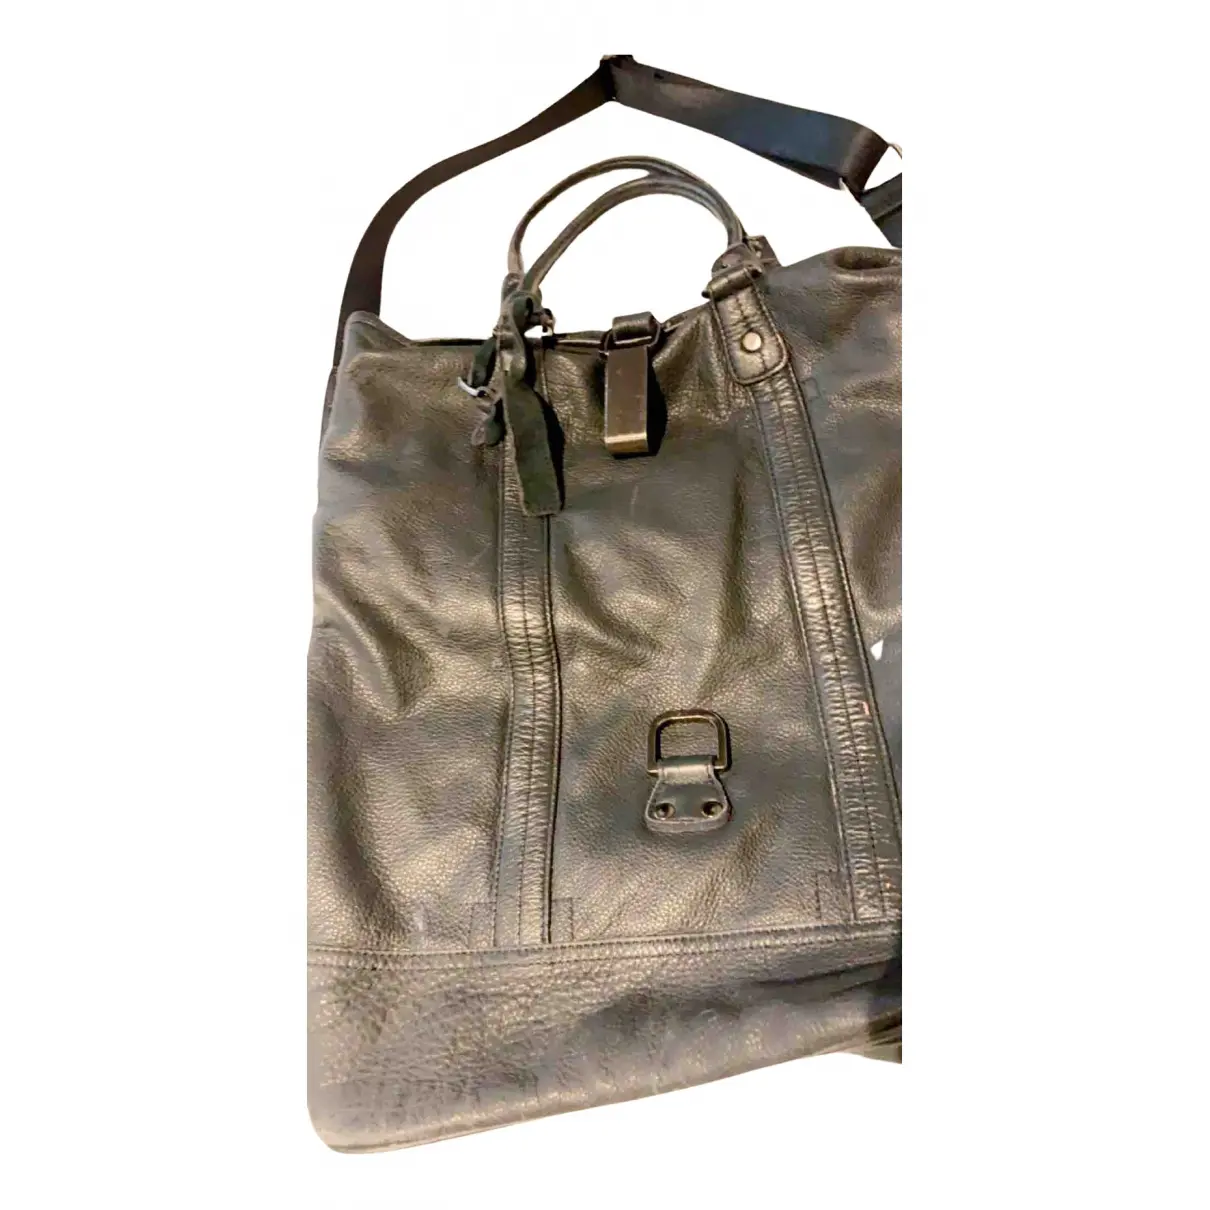 Buy Bel Air Leather handbag online